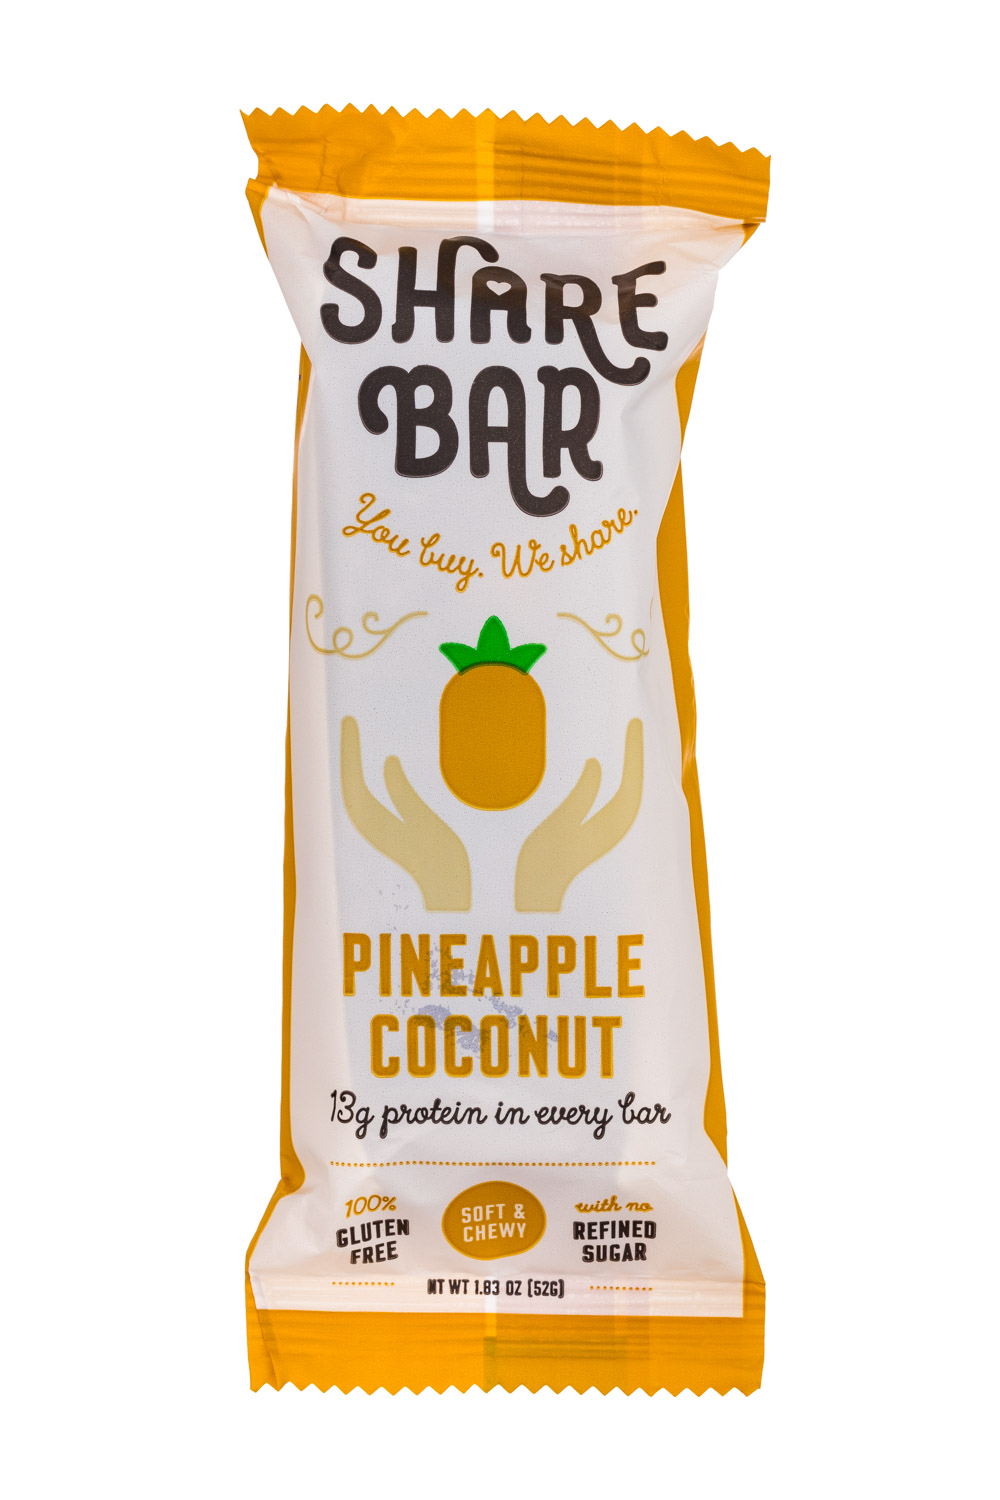 Pineapple Coconut Share Bar